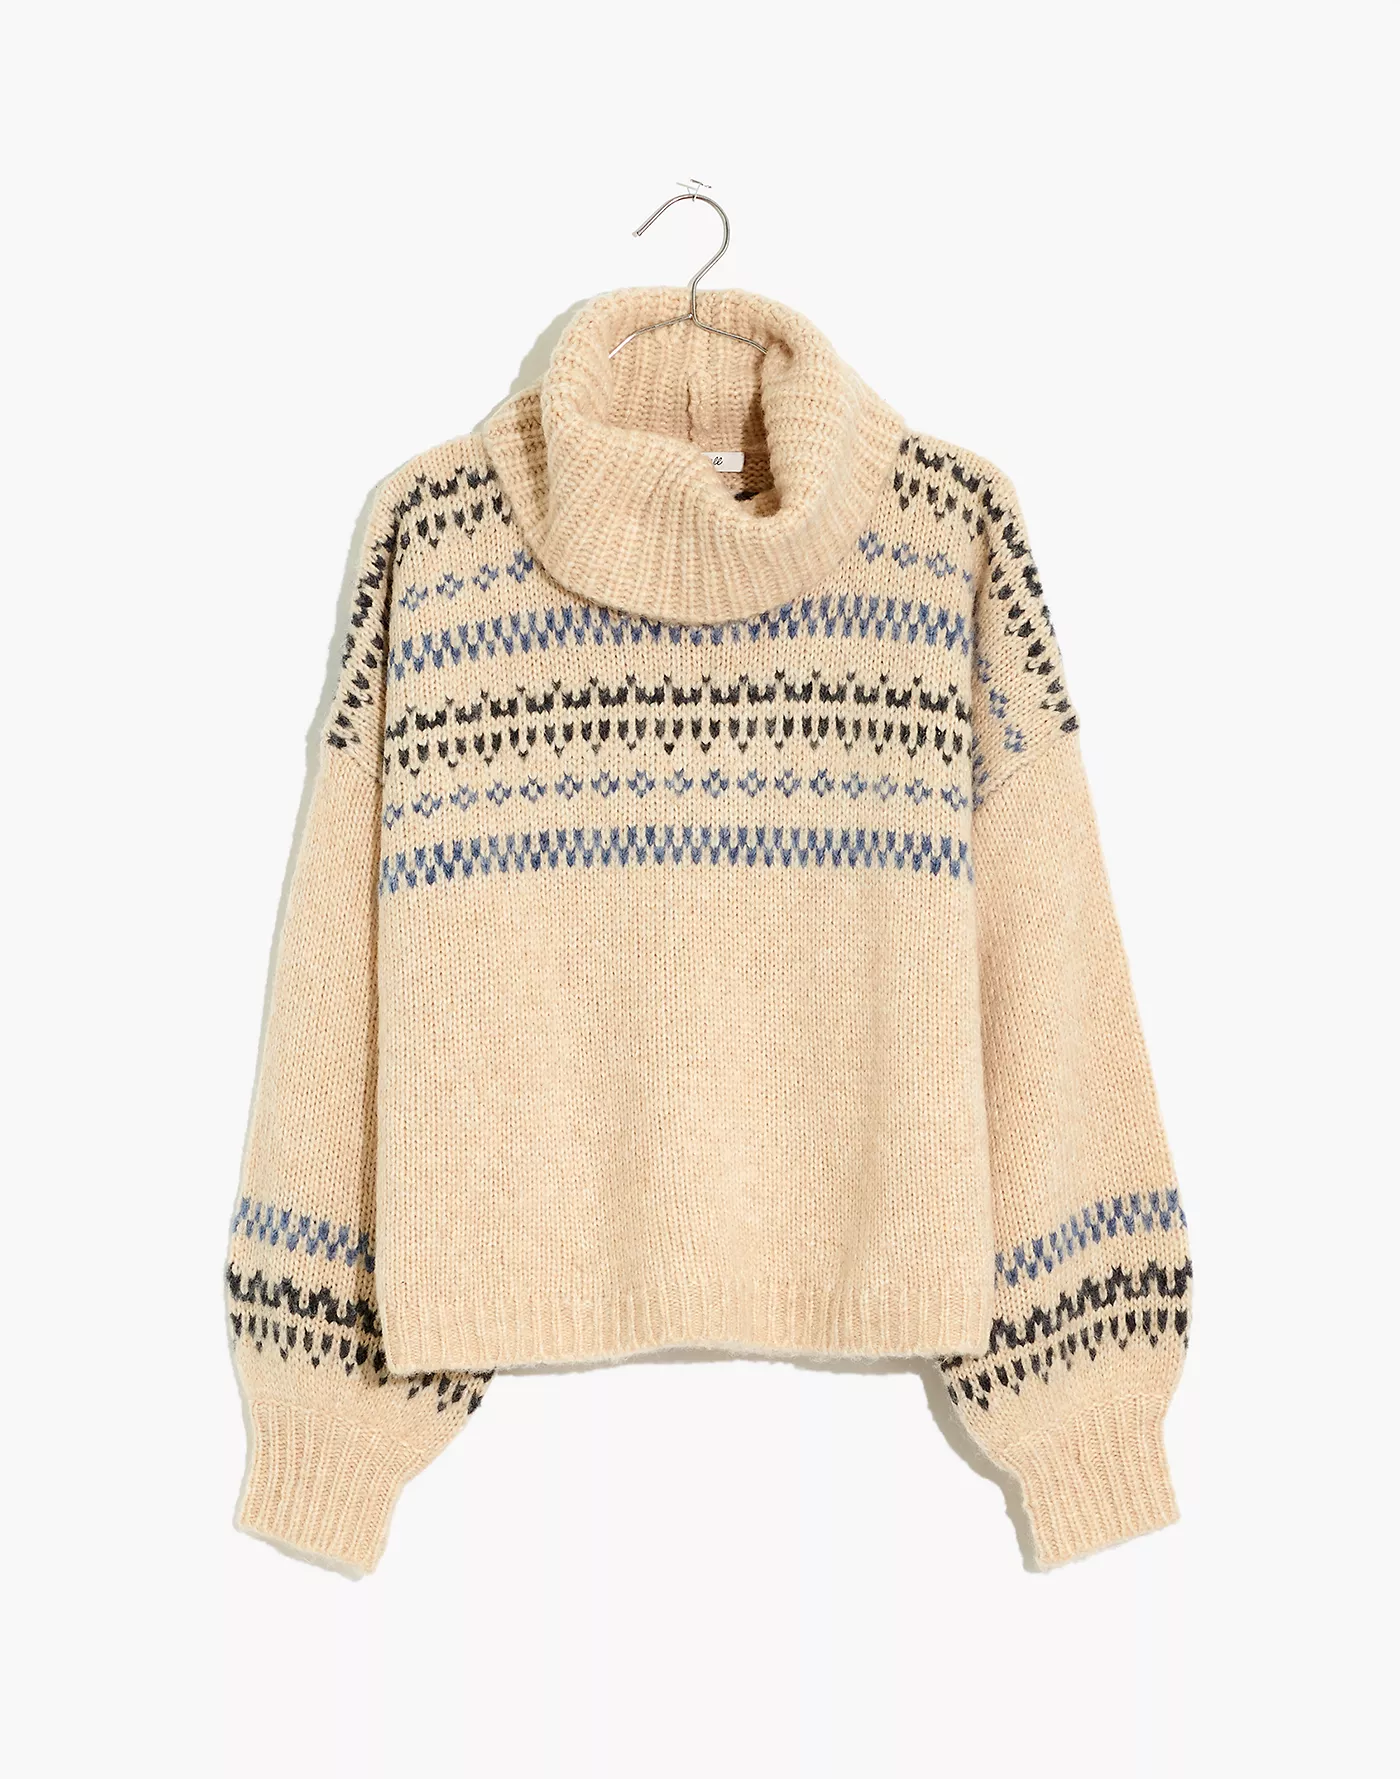 madewell shetland sweater